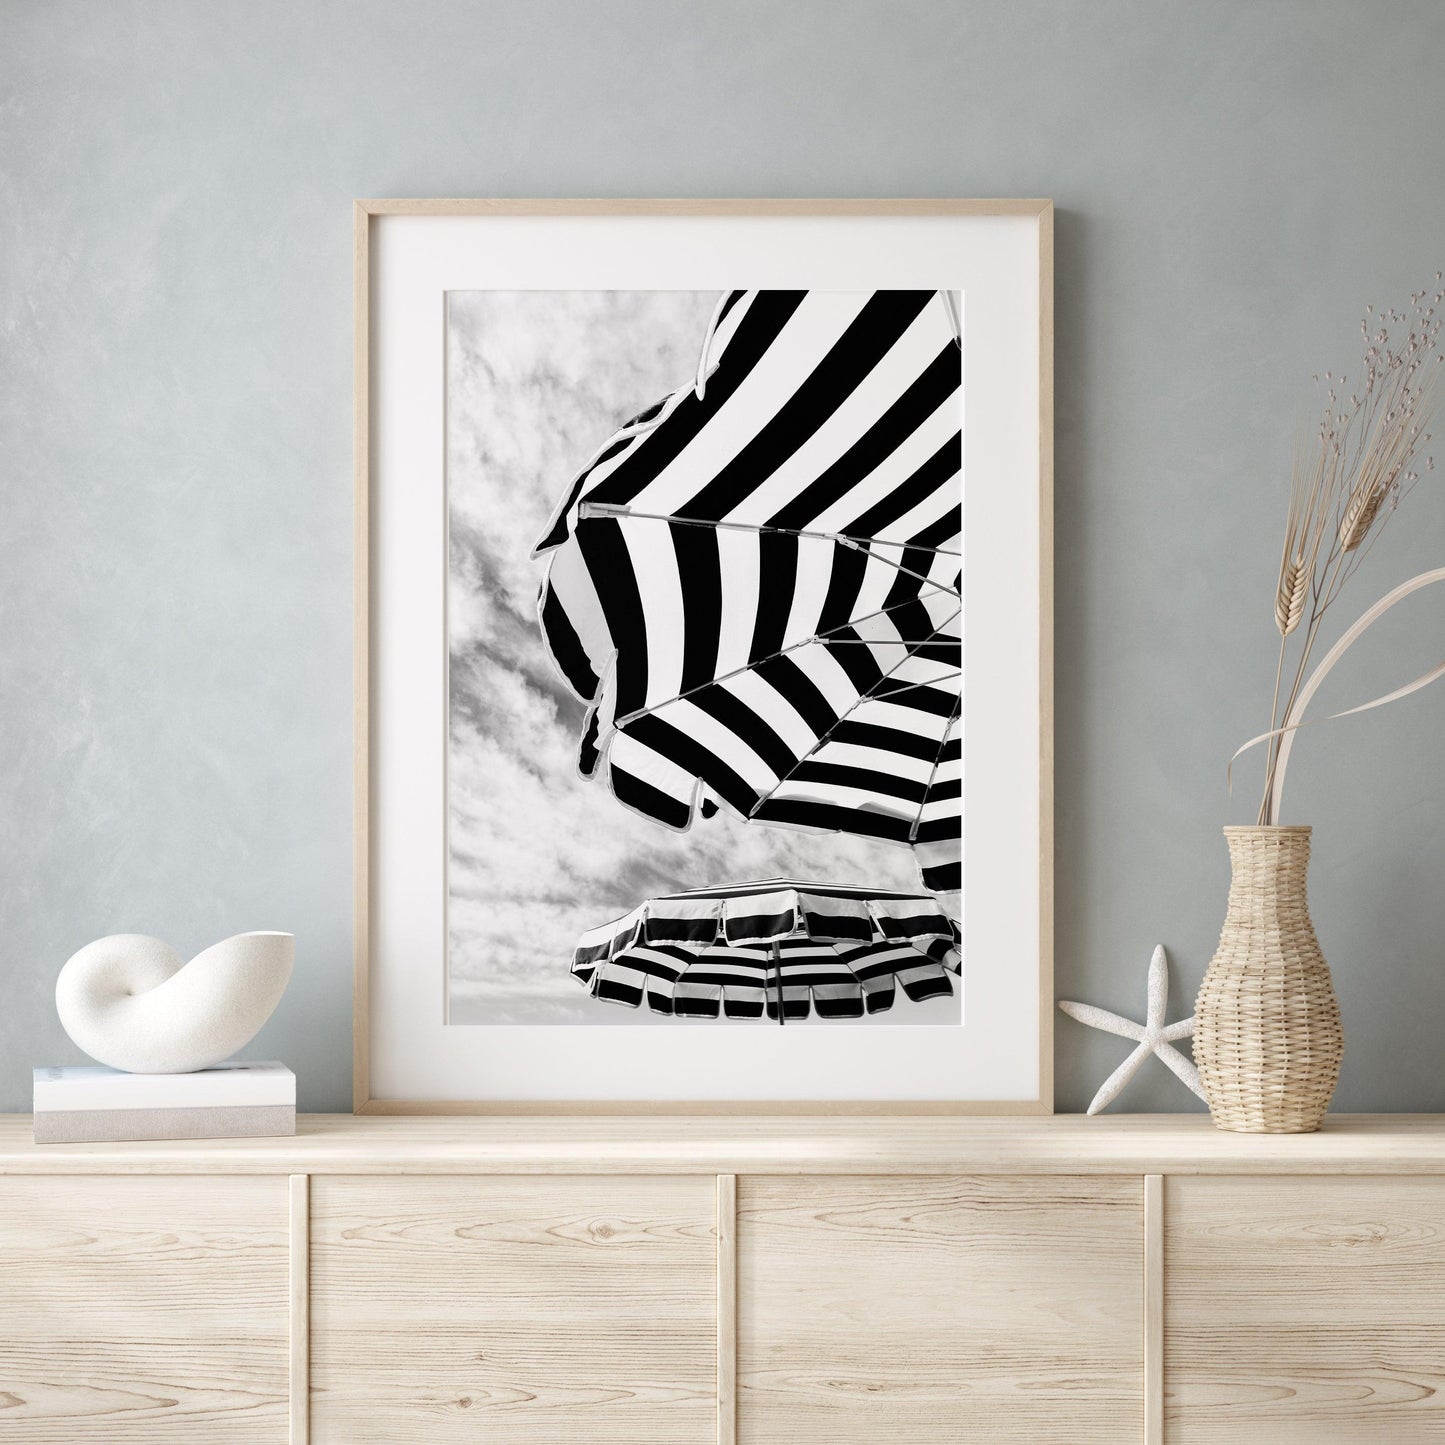 Black and White Cote d'Azur Beach Club Umbrellas | French Riviera Photography Print - Departures Print Shop